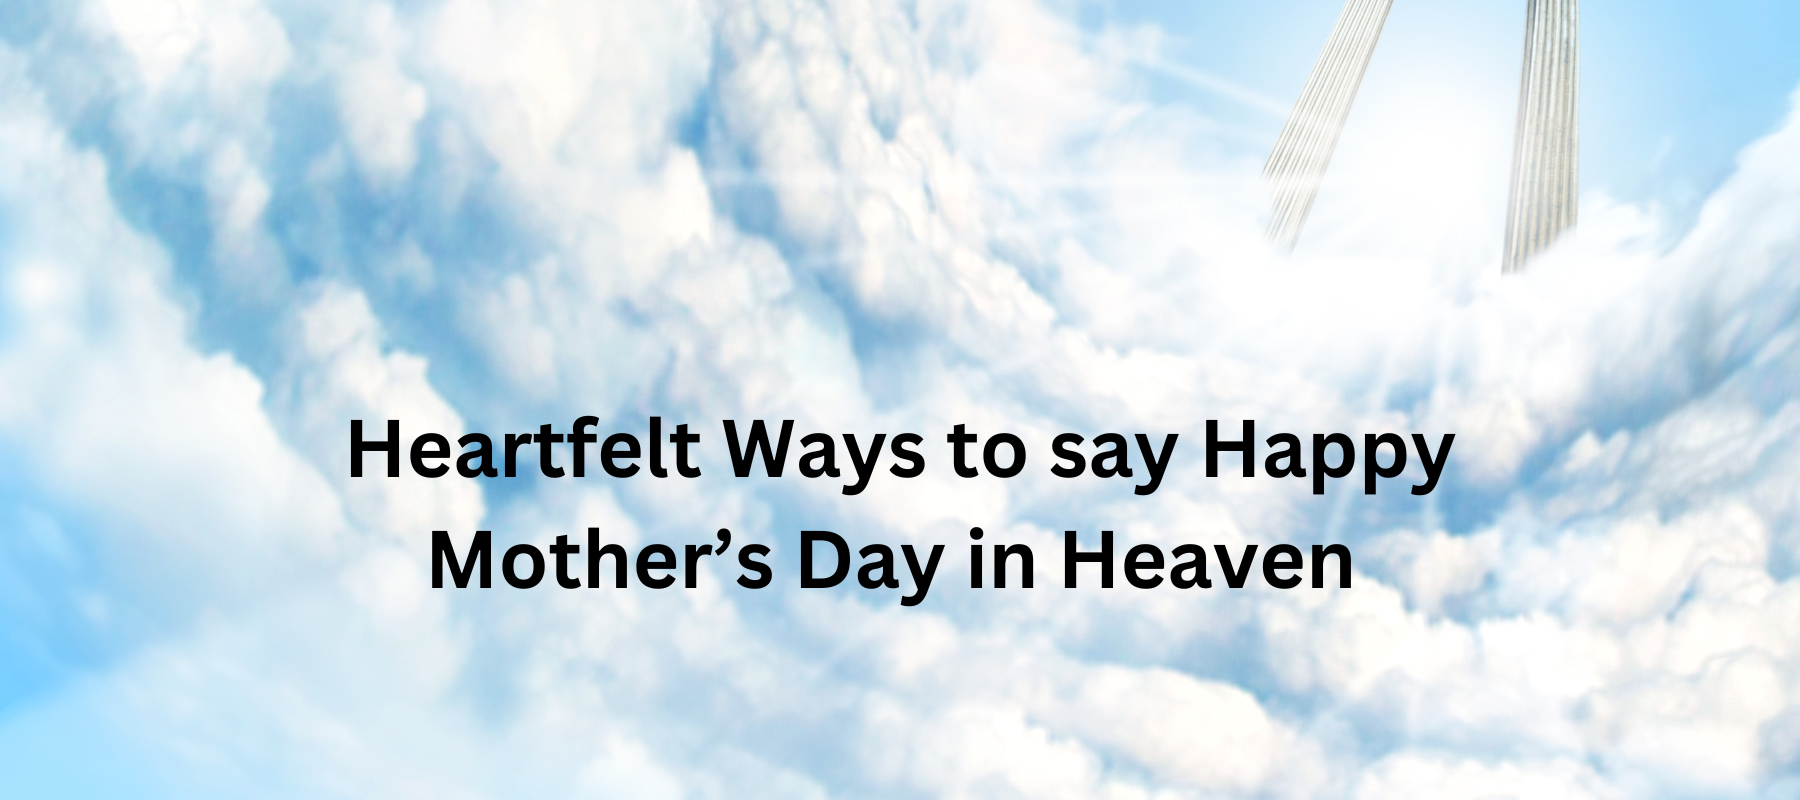 Heartfelt Ways to say Happy Mother’s Day in Heaven 